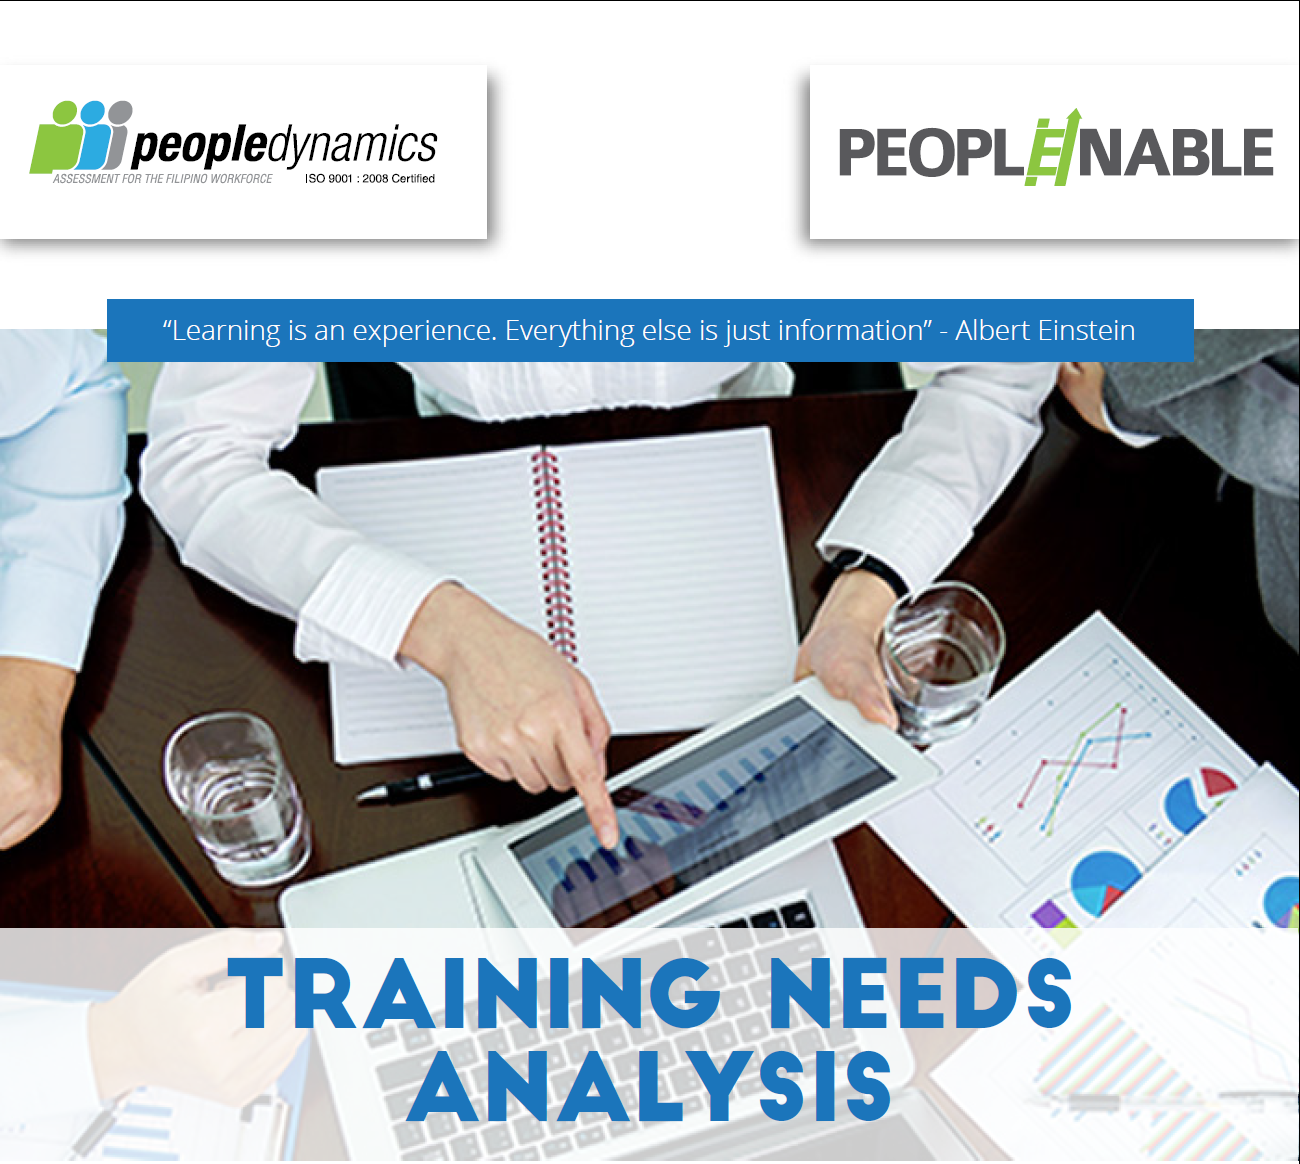 Training needs analysis